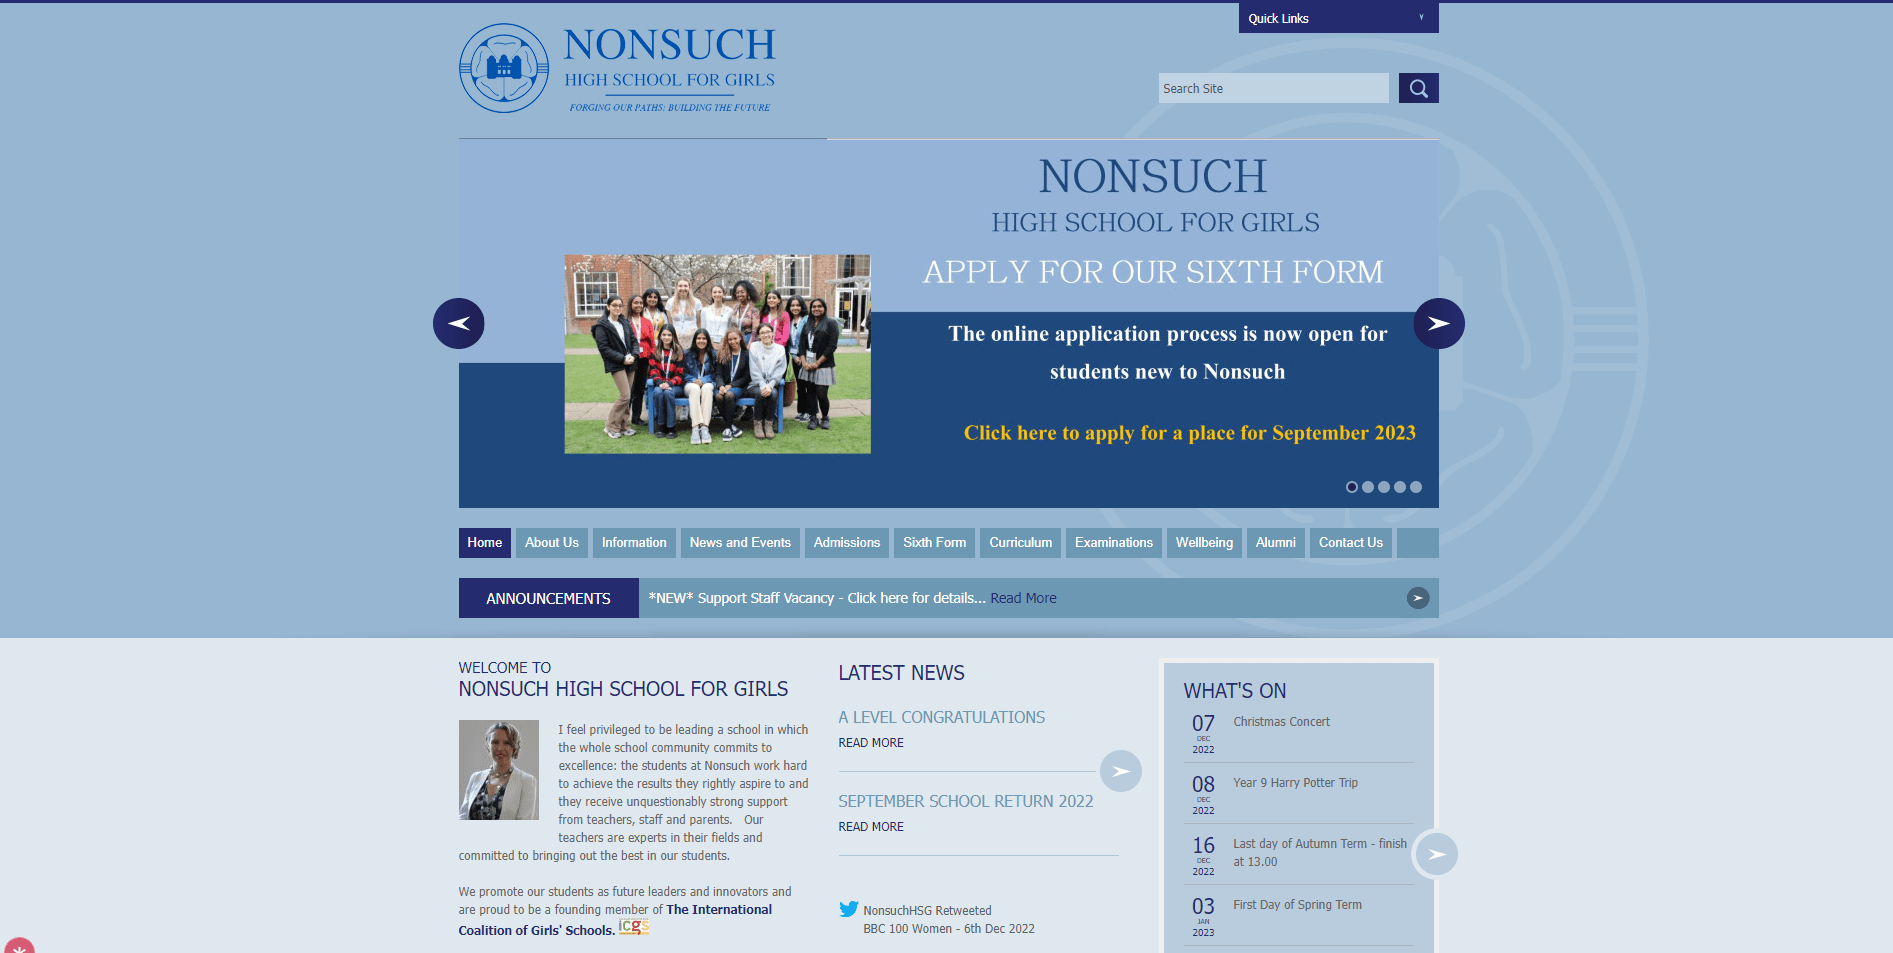 Nonsuch High School for Girls